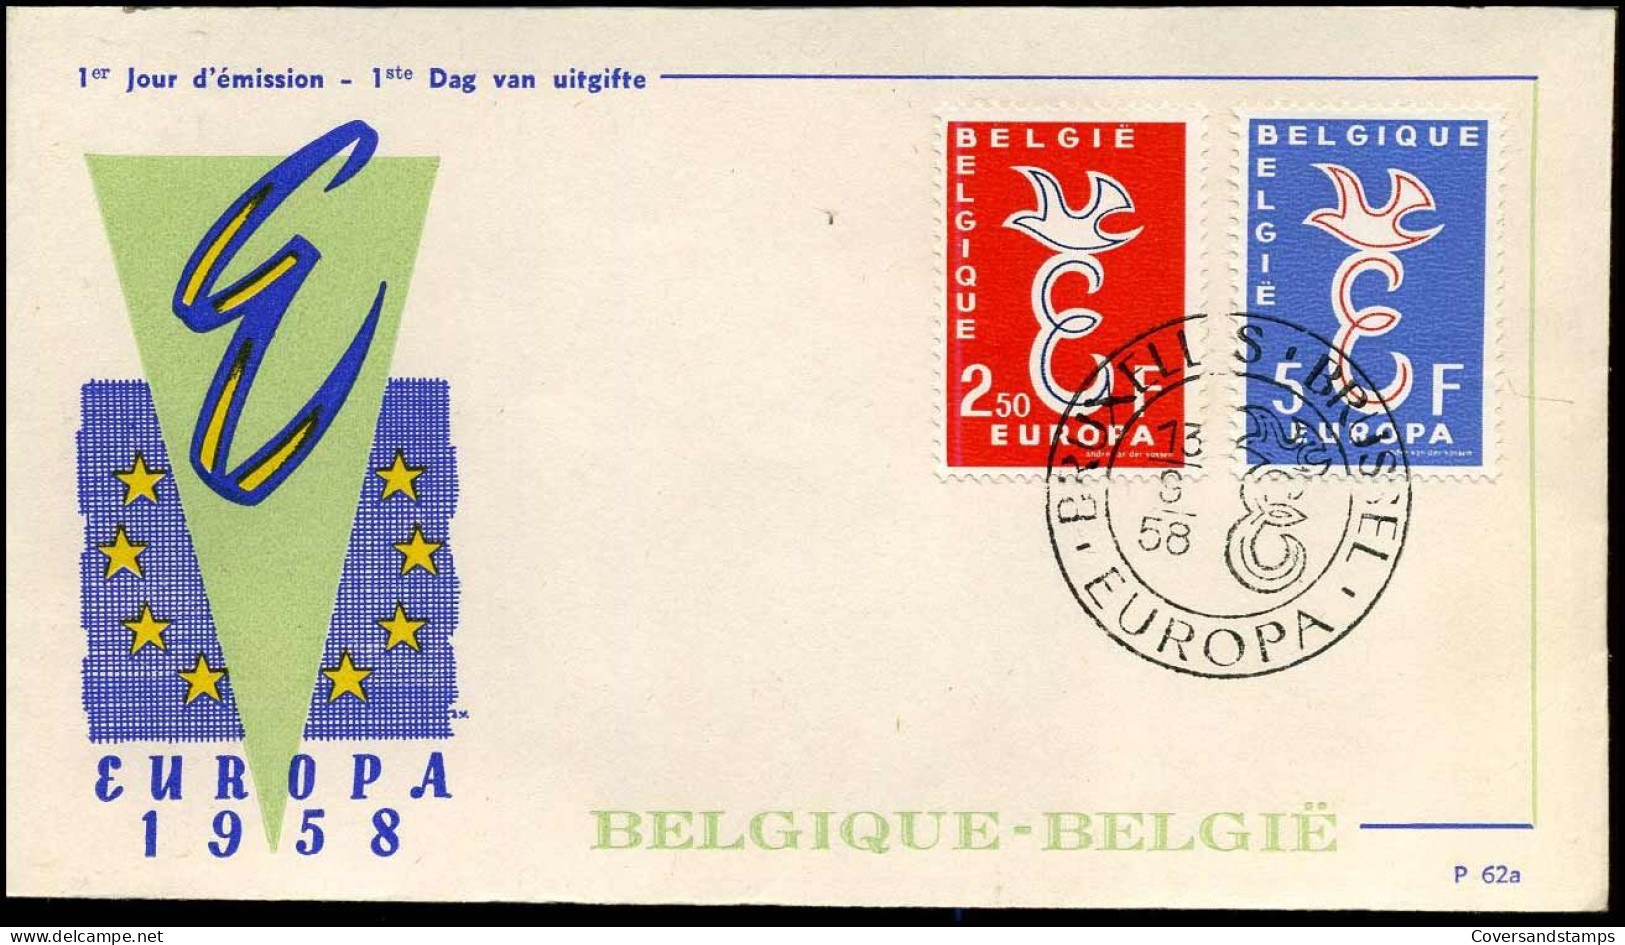 FDC - 1064/65 Europa CEPT - Stempel : Bruxelles-Brussel - 1951-1960